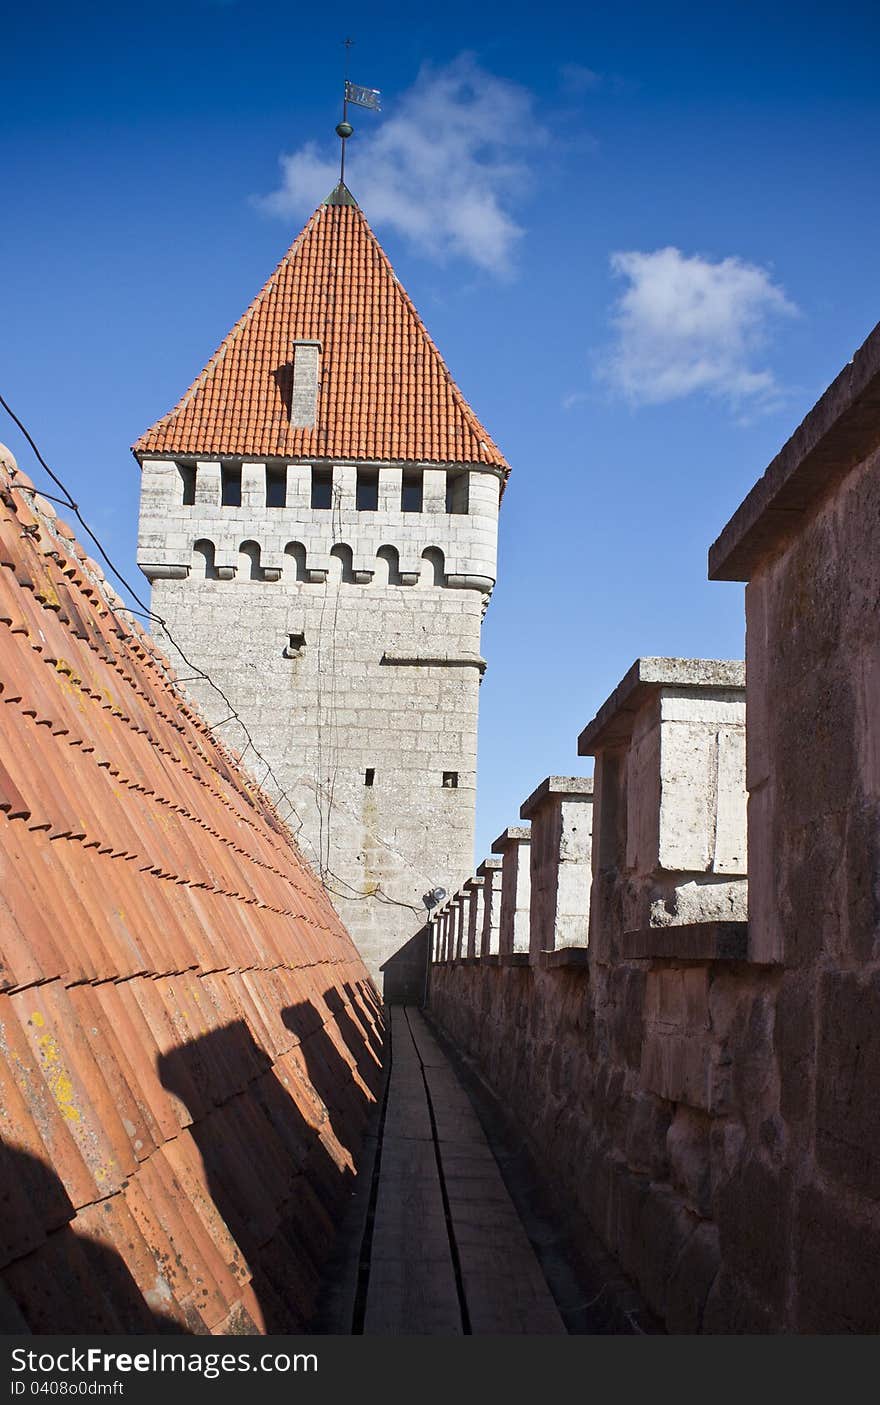 Defence tower fortress of Kuressaare (13th century), located on island Saaremaa, Estonia. Photo taken September 2011